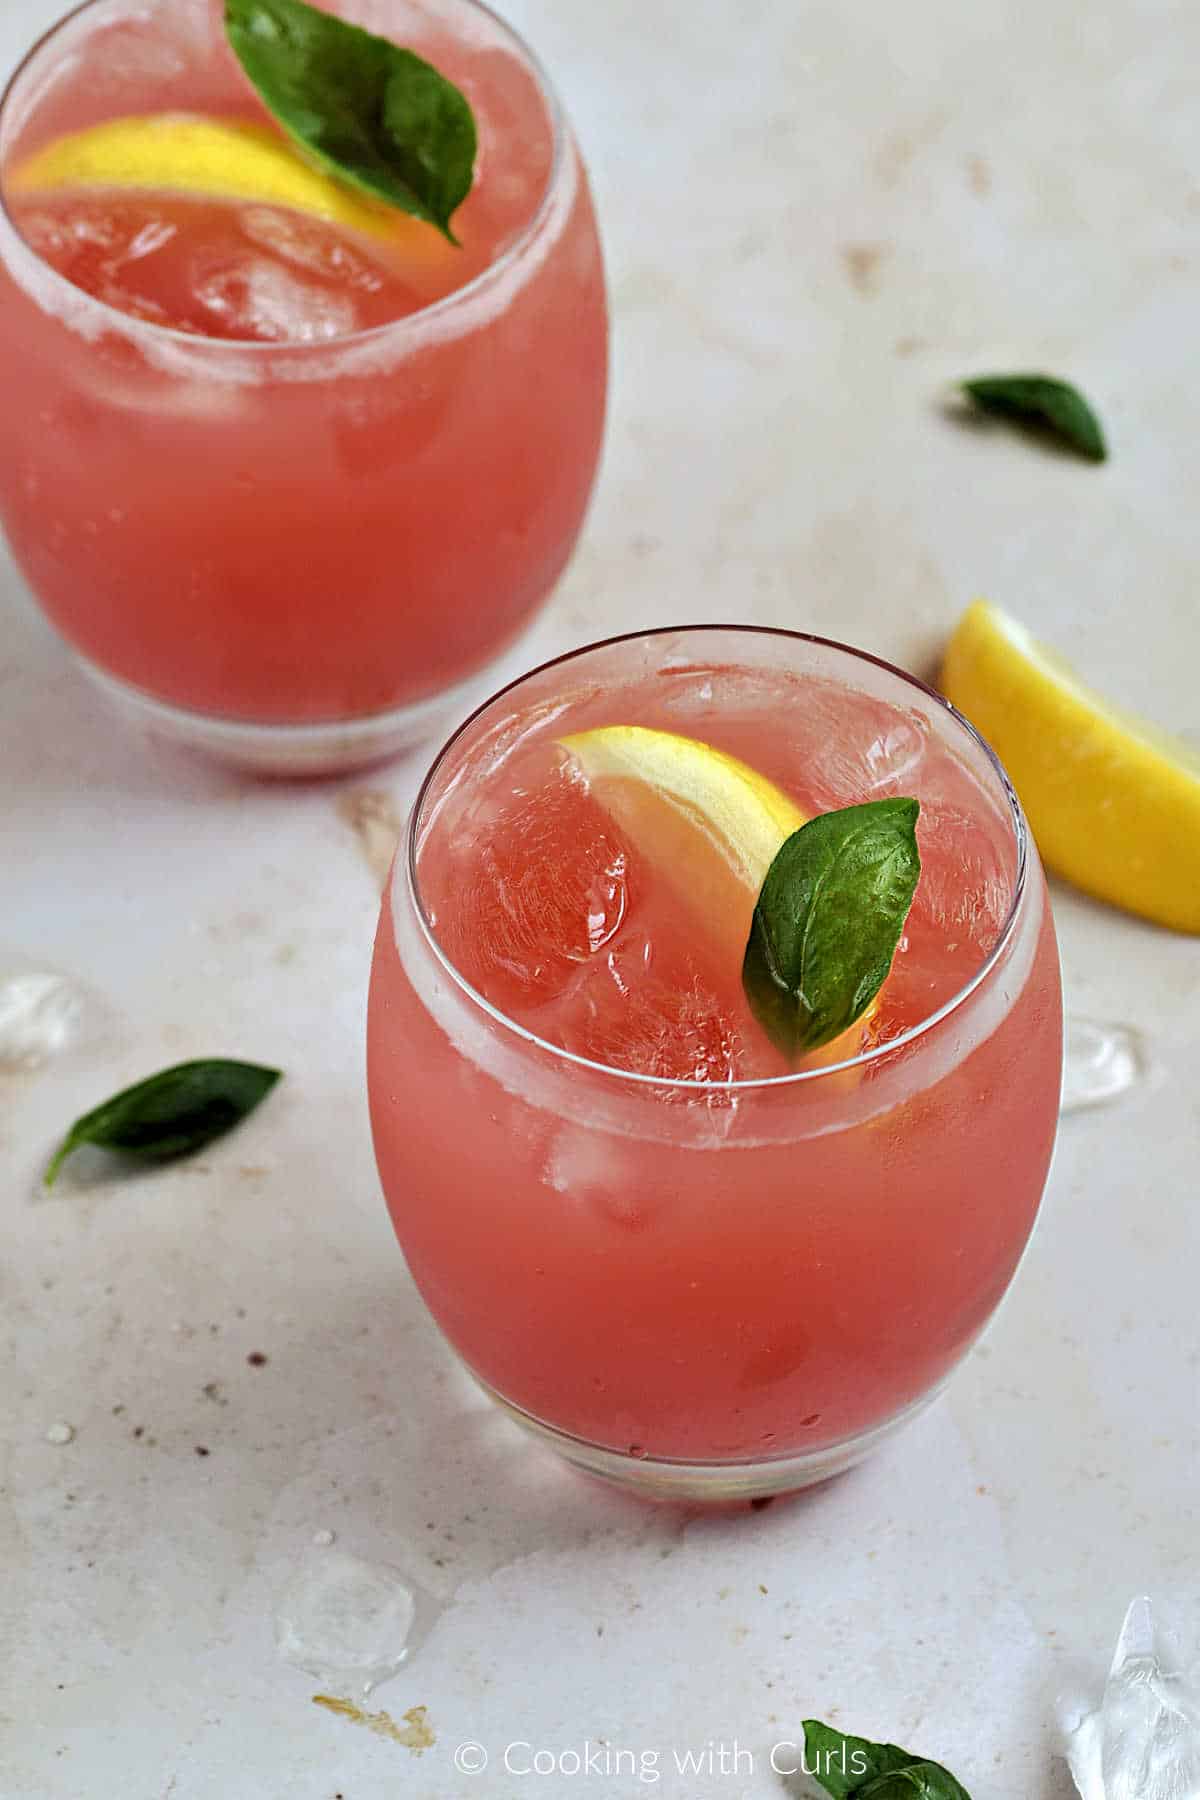 Two glasses of pink watermelon basil lemonade drinks with a lemon wedge and basil garnish.